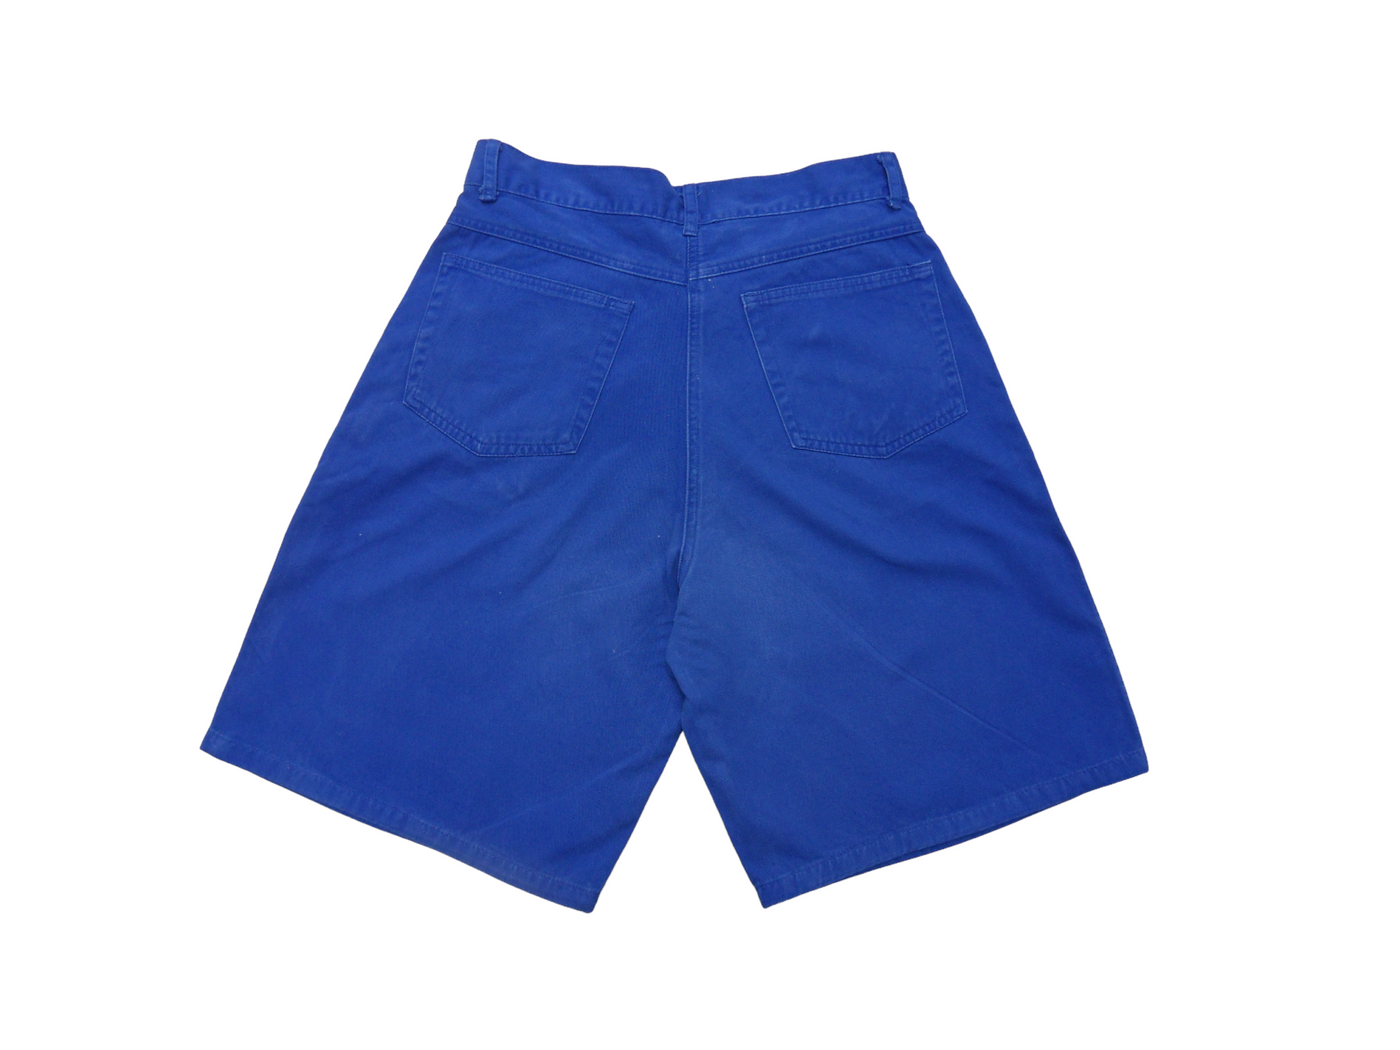 Vintage Gina Benotti Bright Blue Cotton  Women's High Waisted shorts Size - M (12/14 AU)